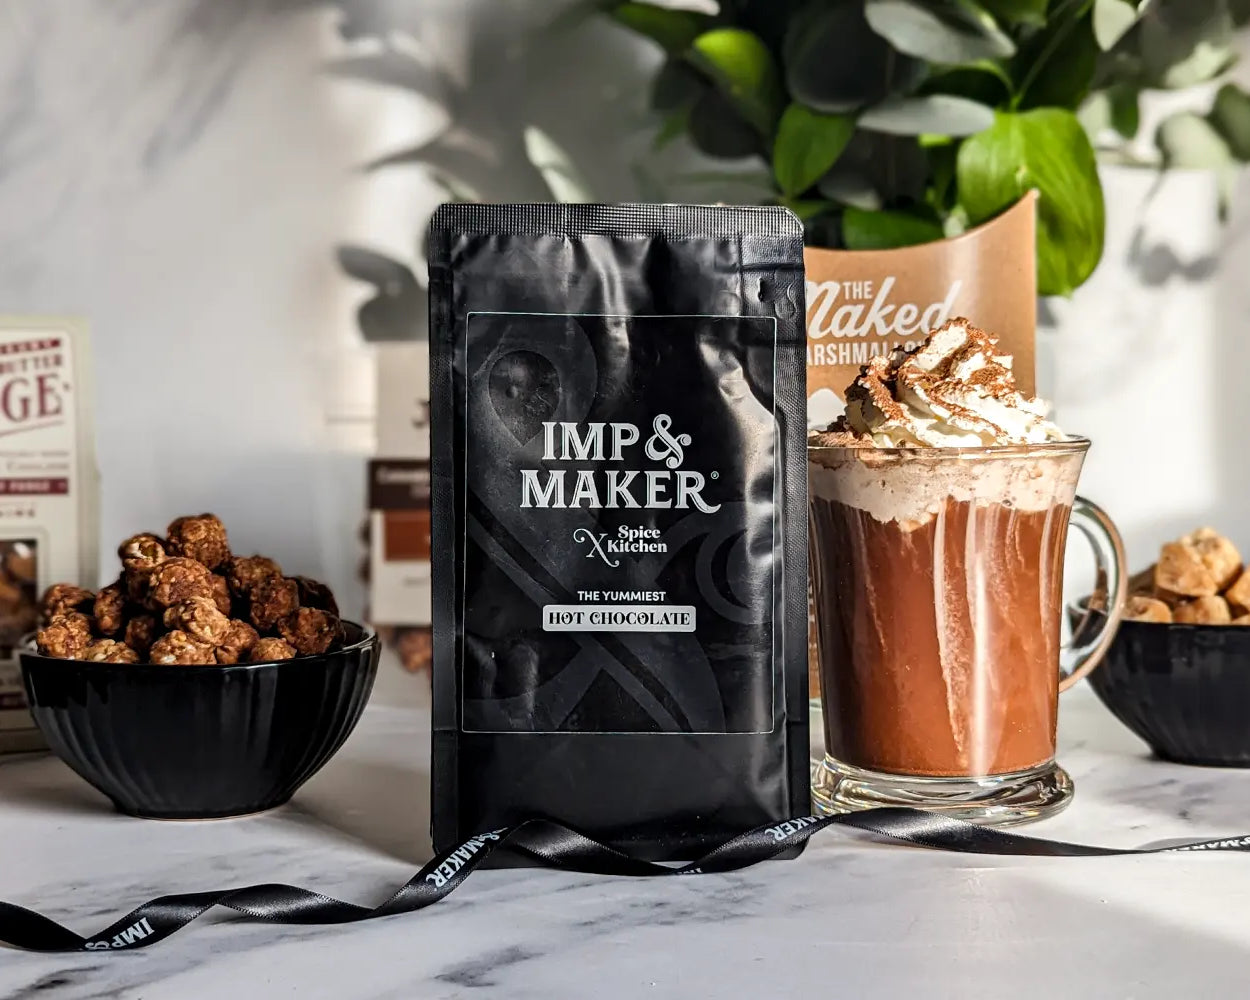 Hot Chocolate & Treats - IMP & MAKER